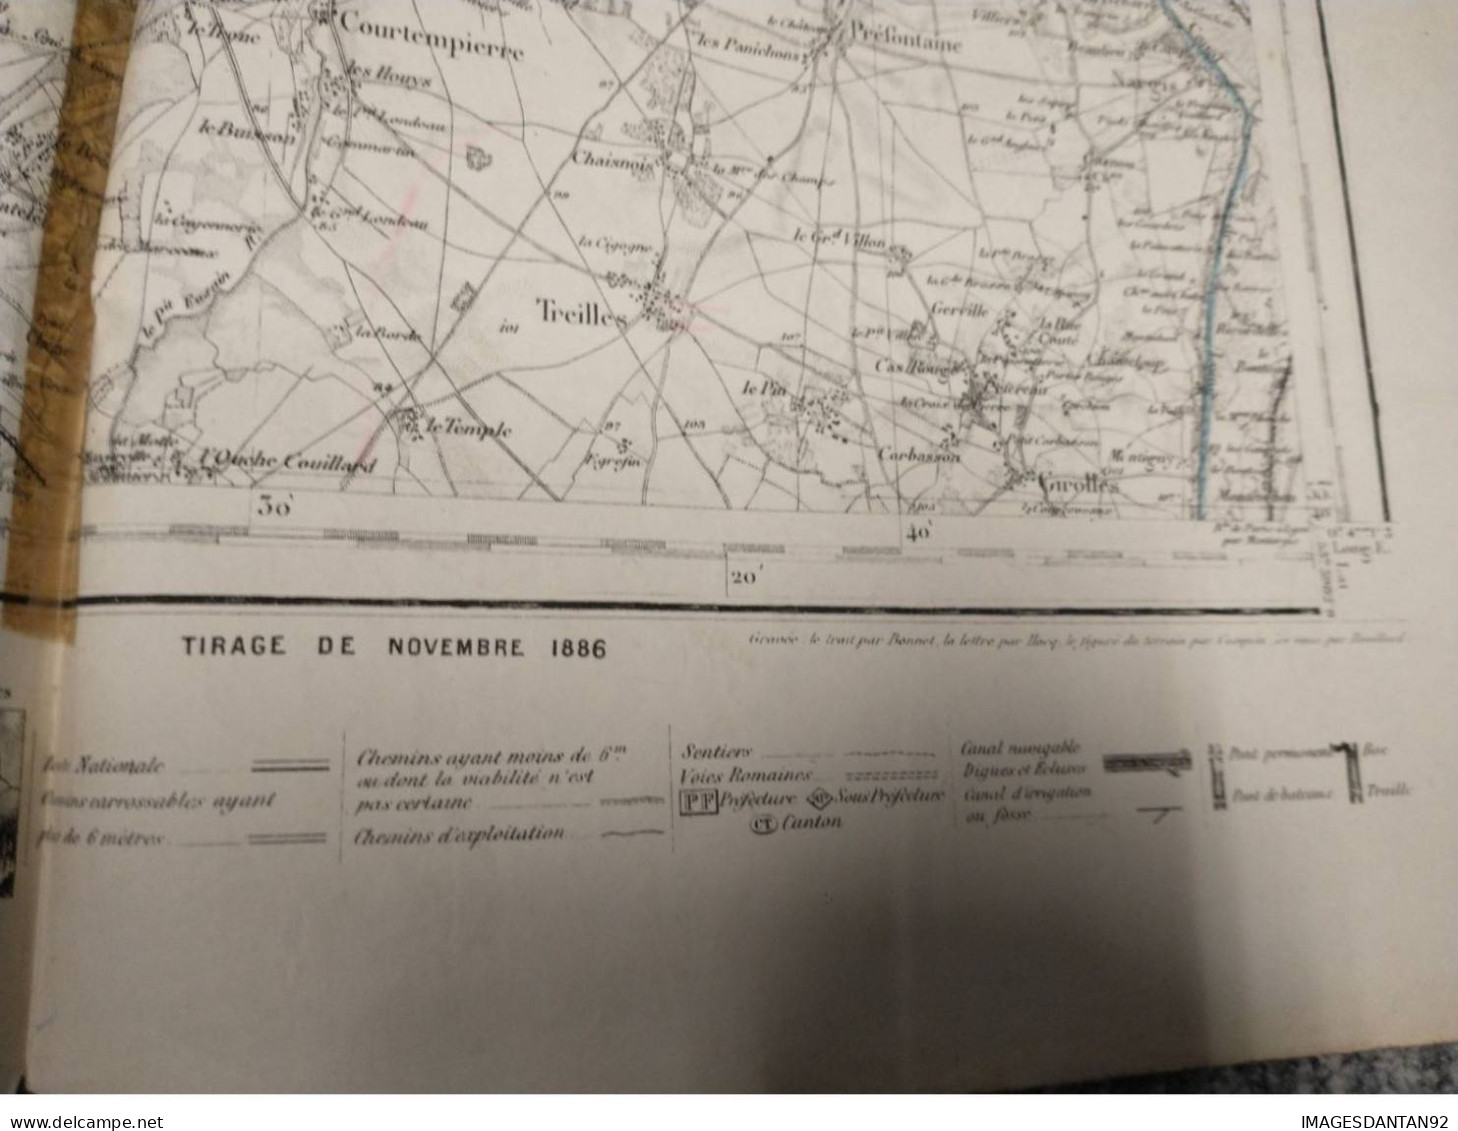 77 FONTAINEBLEAU GRAND PLAN DE 1886 LEVEE PAR OFFICIERS CORPS D ETAT MAJOR DE 1839  CACHET STEAM YACHT DAUPHIN CAPITAINE - Topographische Kaarten